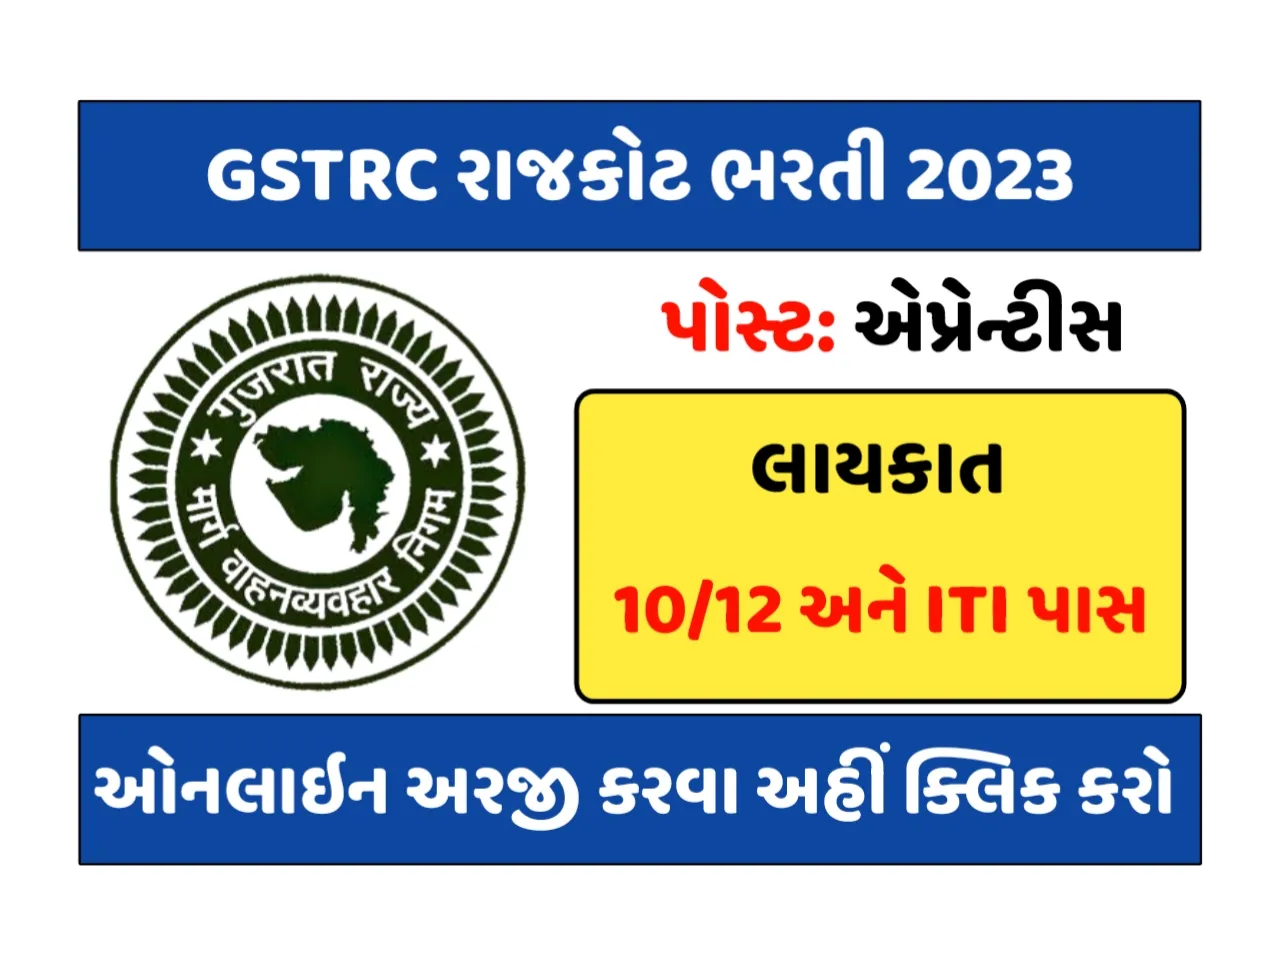 GSRTC Rajkot Recruitment 2023: રાજકોટ દ્વારા એપ્રેન્ટીસ પોસ્ટ પર ભરતી, જાણો સંપૂર્ણ માહિતી